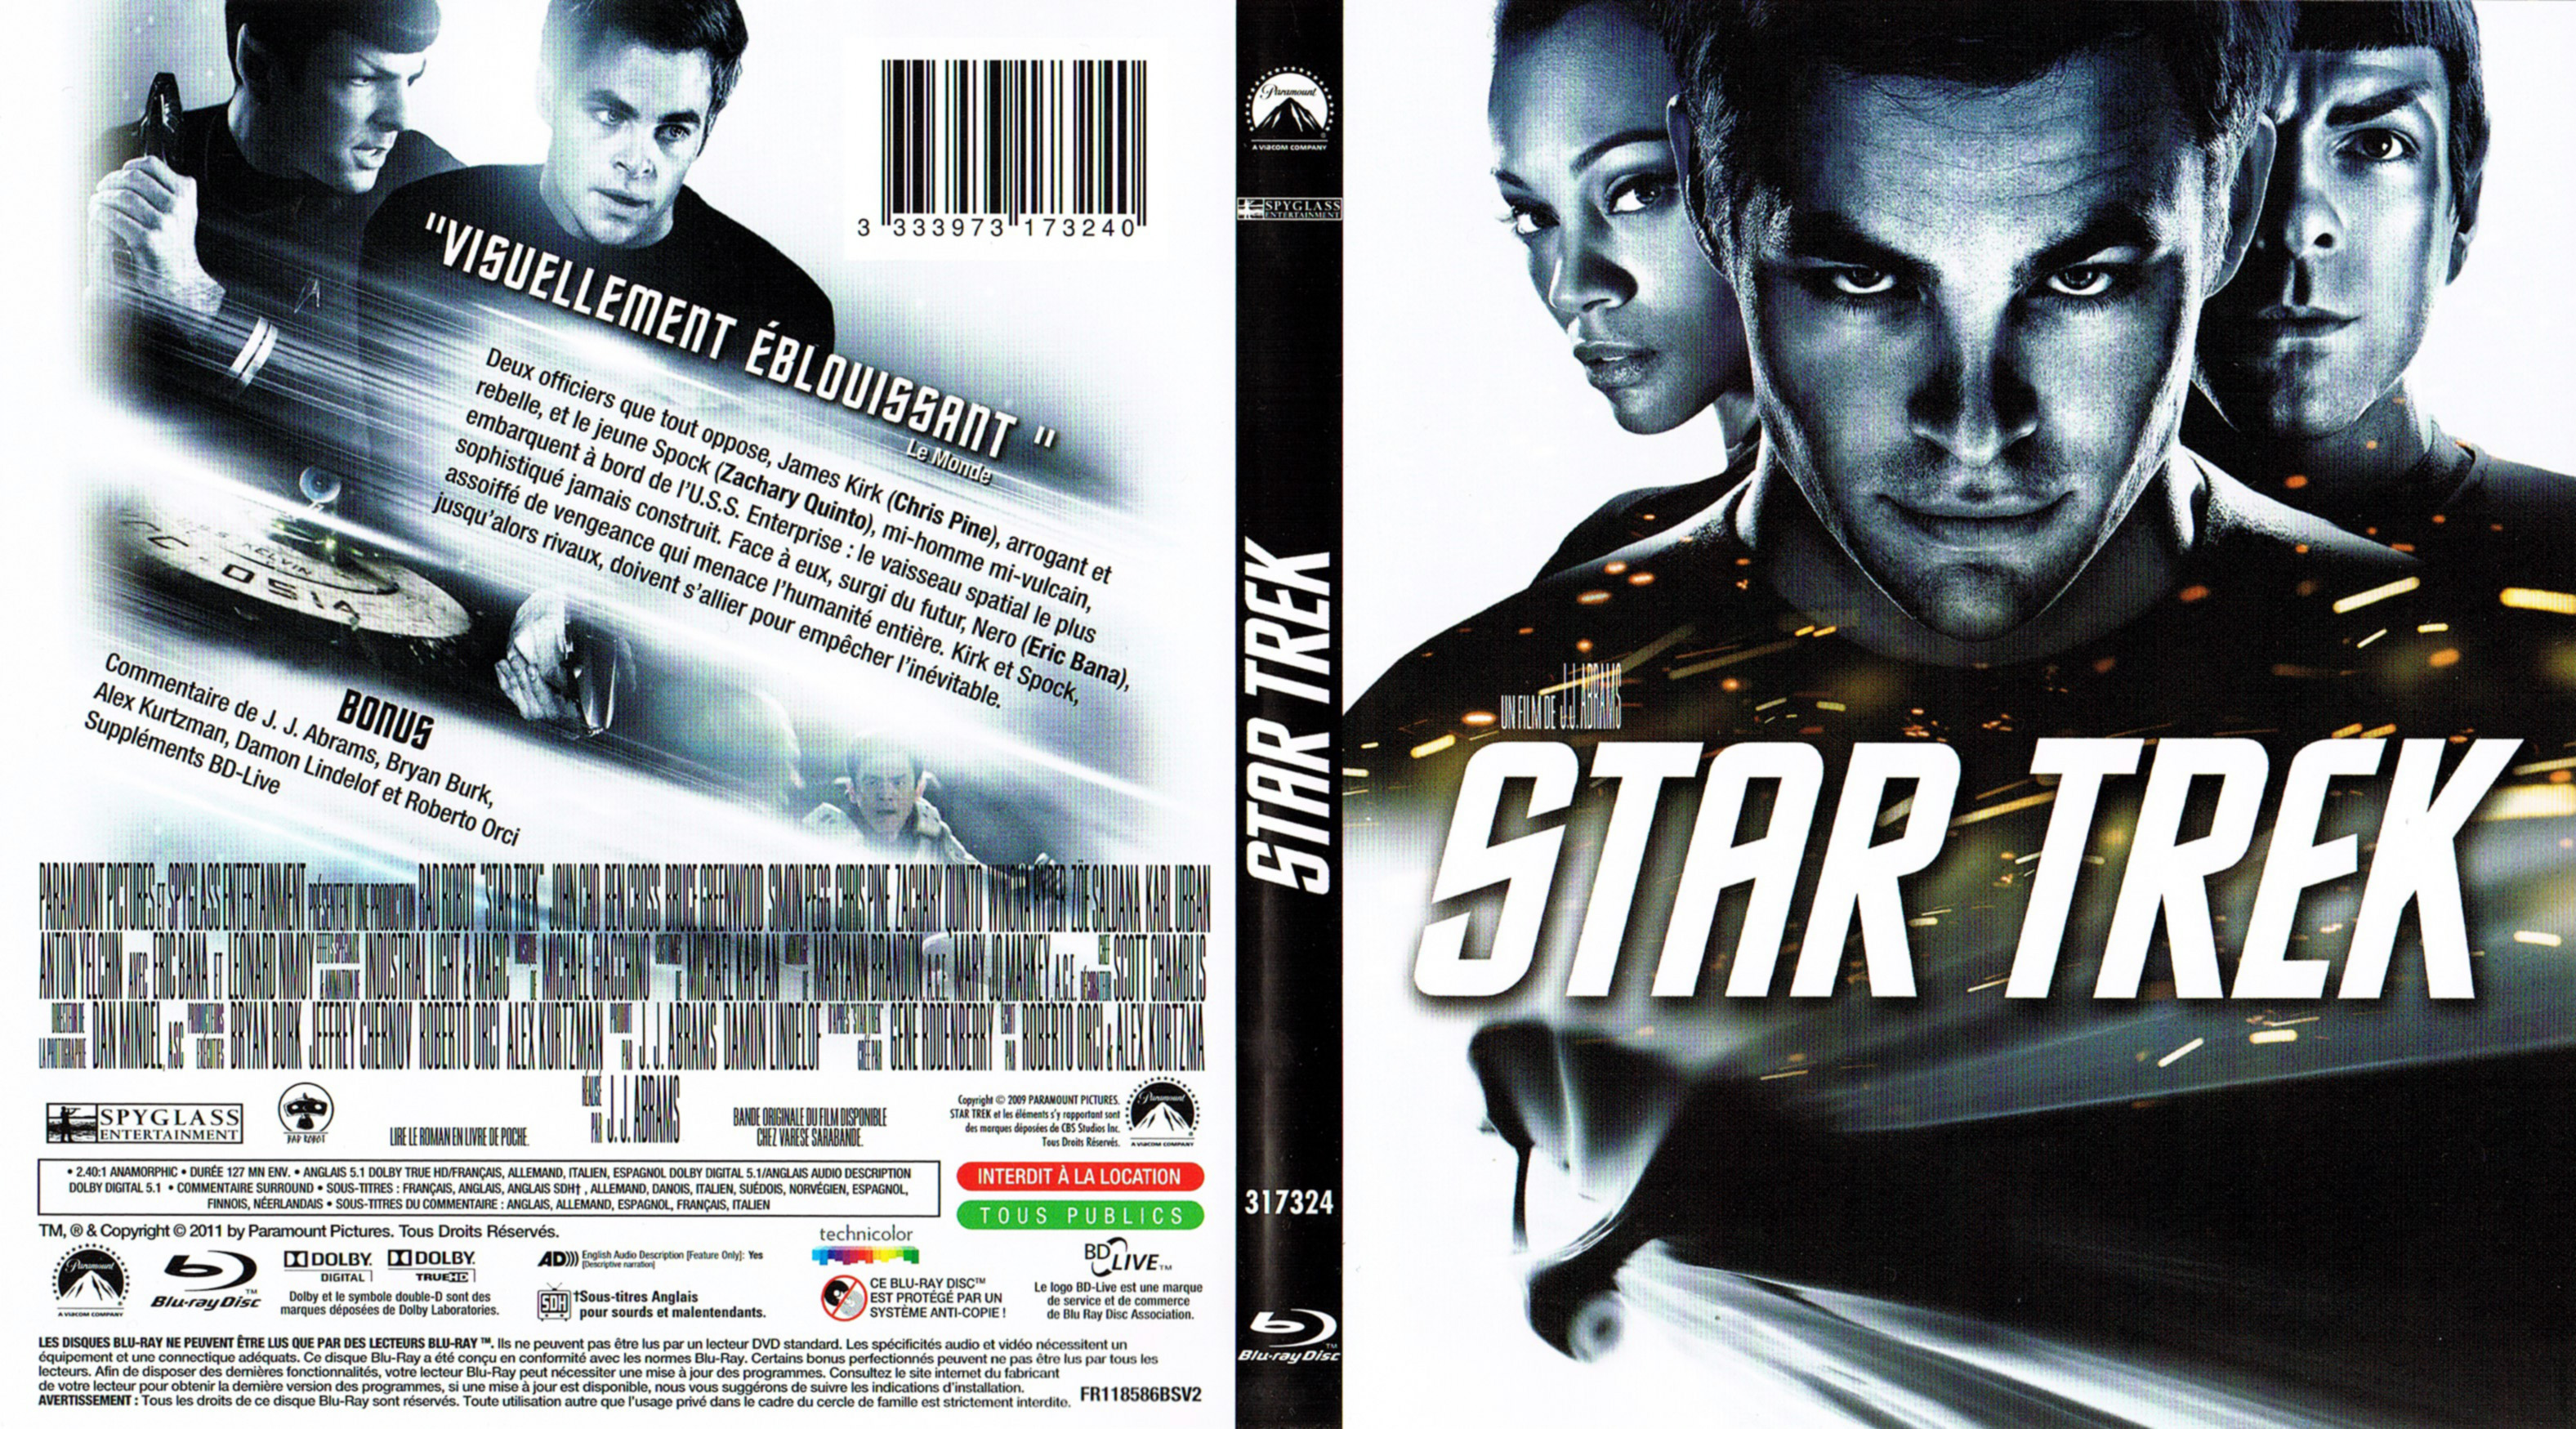 Jaquette DVD Star trek (2009) (BLU-RAY) v2